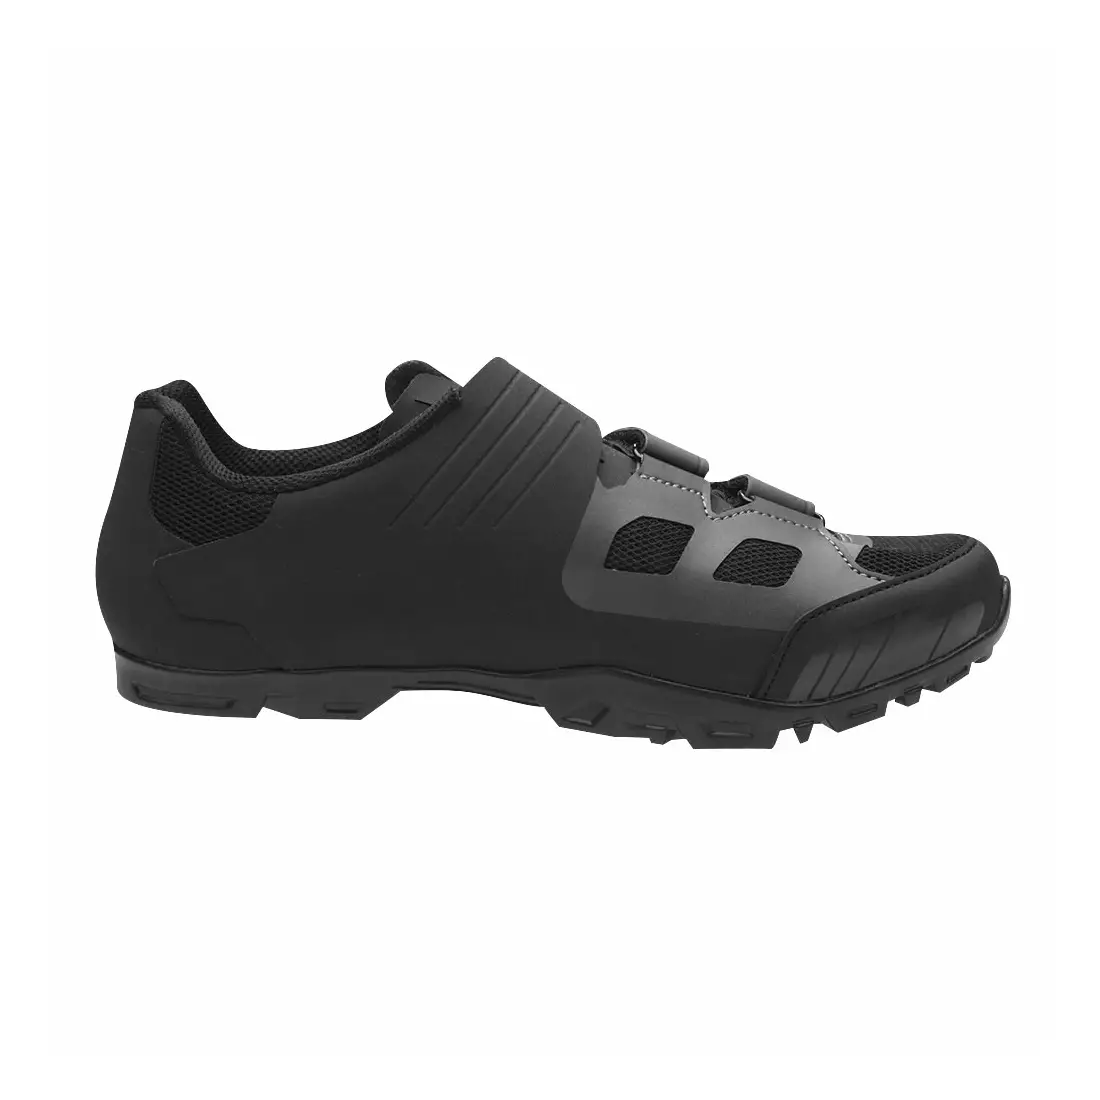 PEARL IZUMI All-Road V4 men's MTB cycling shoes black/shadow gray 15117004